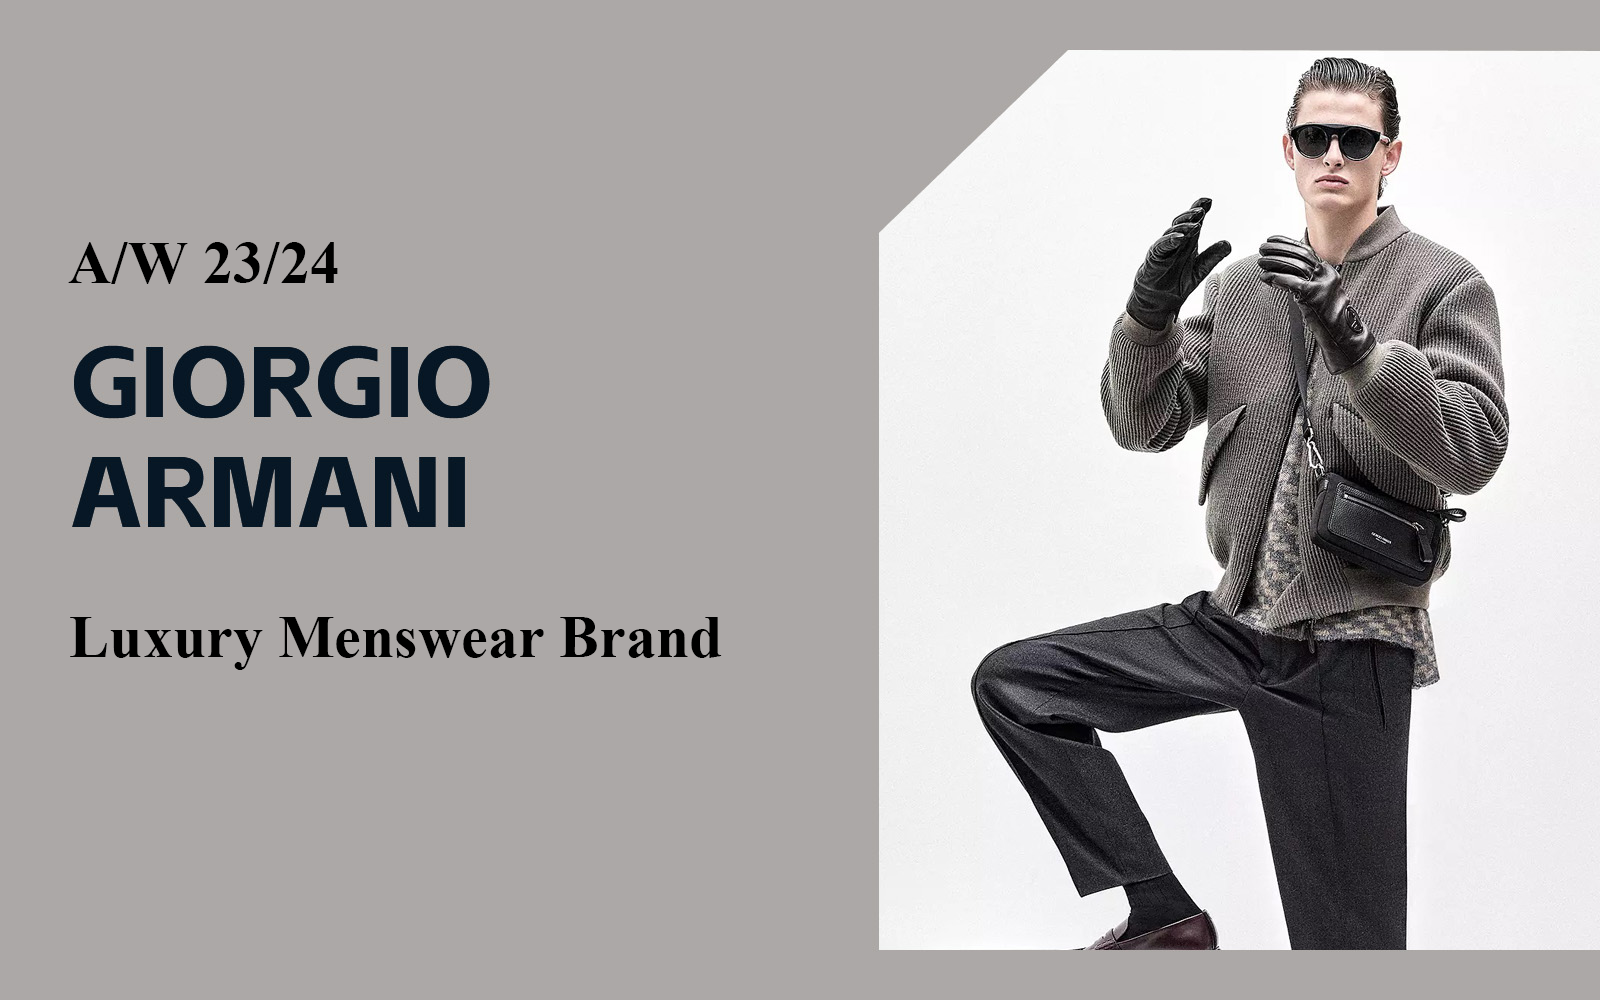 The Analysis of Giorgio Armani The Luxury Menswear Brand